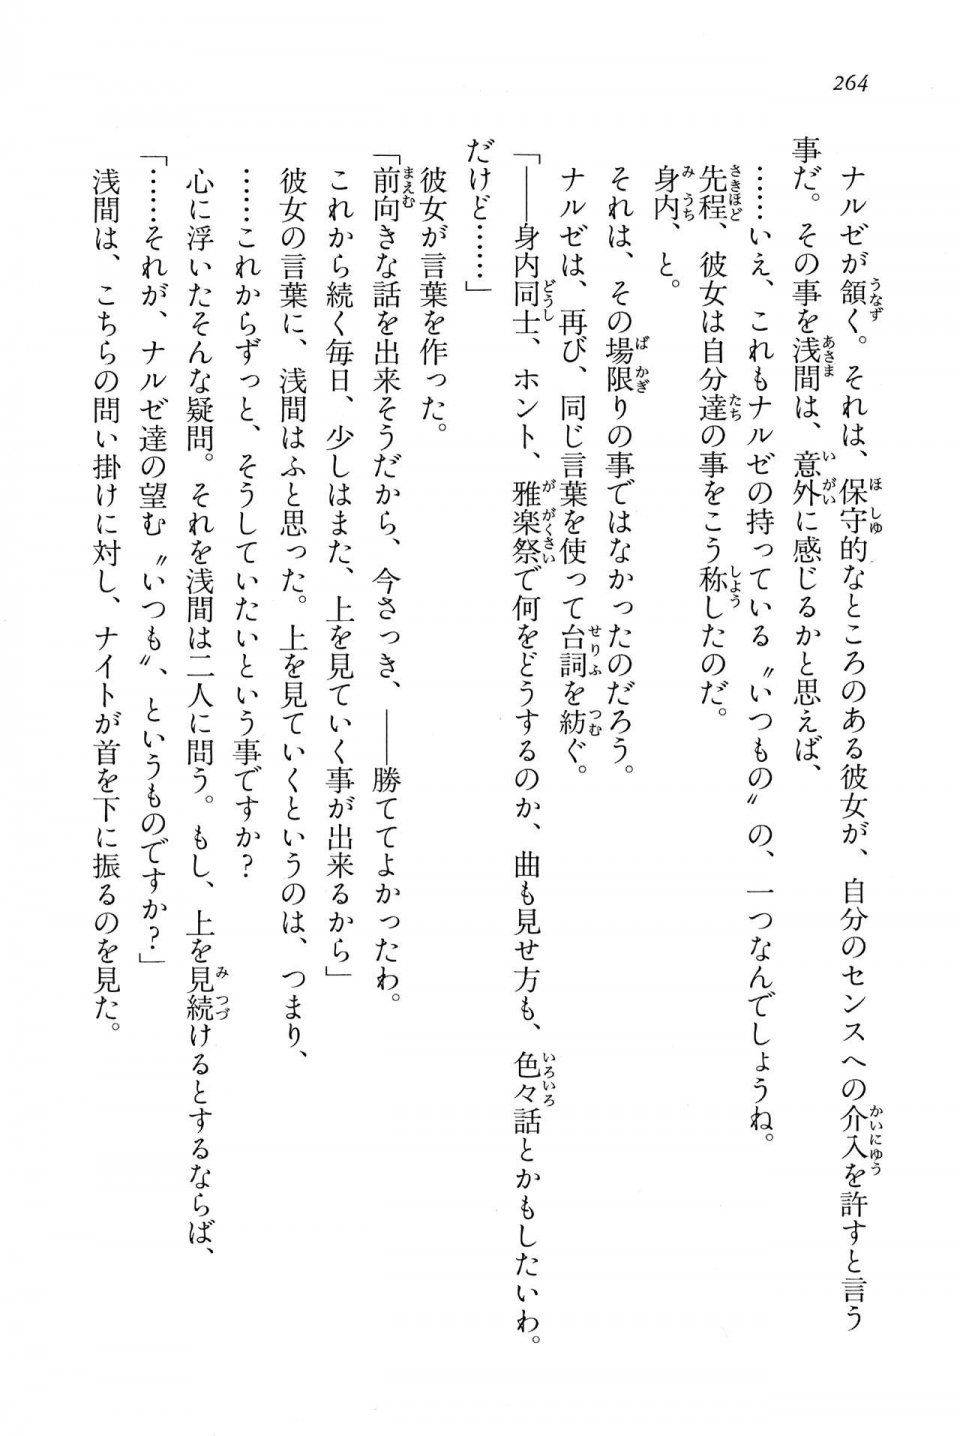 Kyoukai Senjou no Horizon BD Special Mininovel Vol 6(3B) - Photo #268